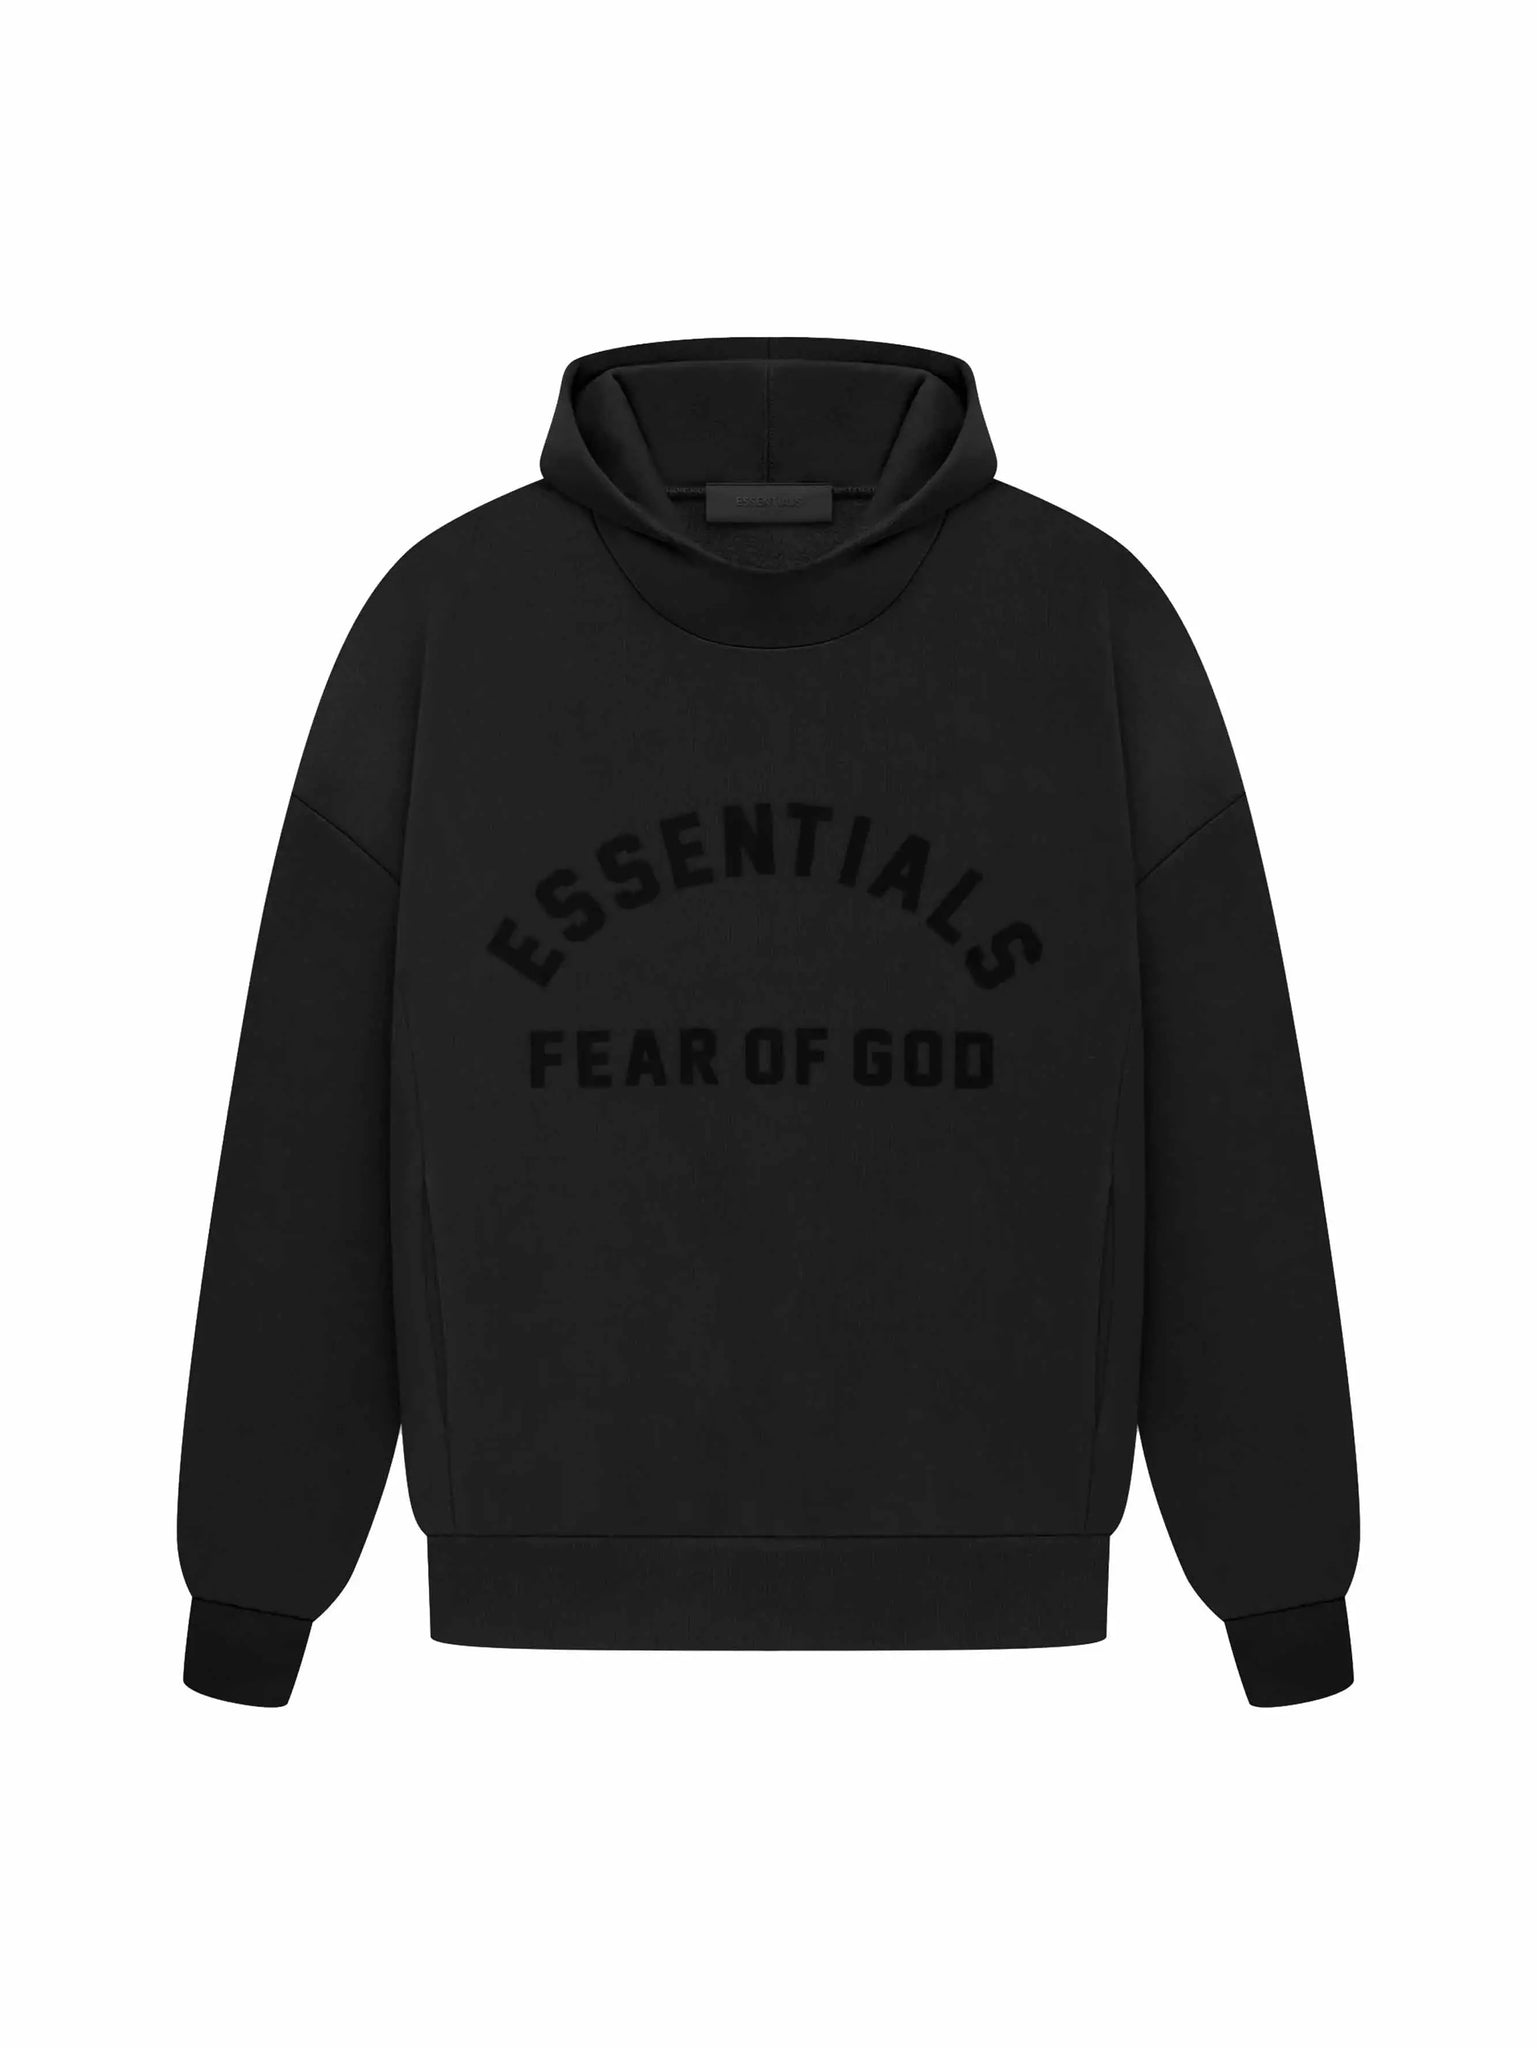 Fear of God Essentials Hoodie Black - Prior